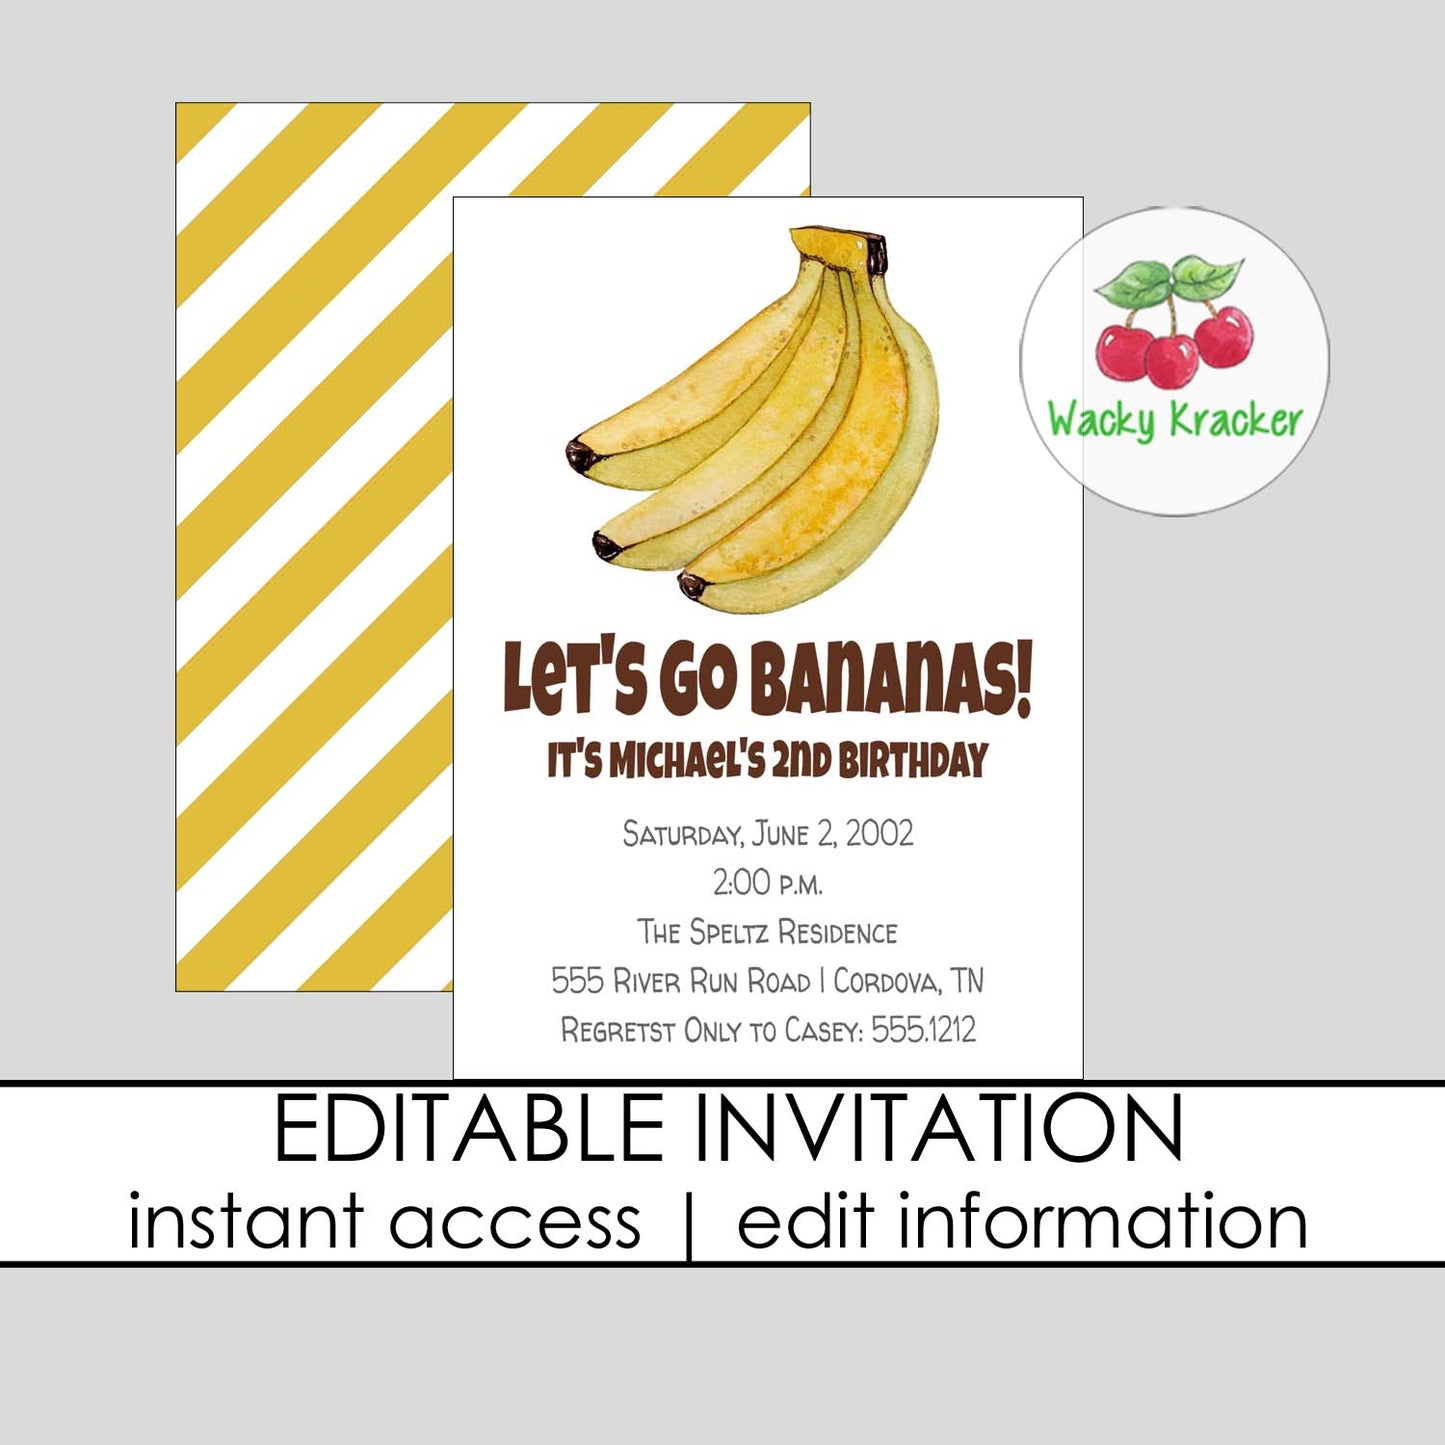 Let's Go Bananas Birthday Invitation